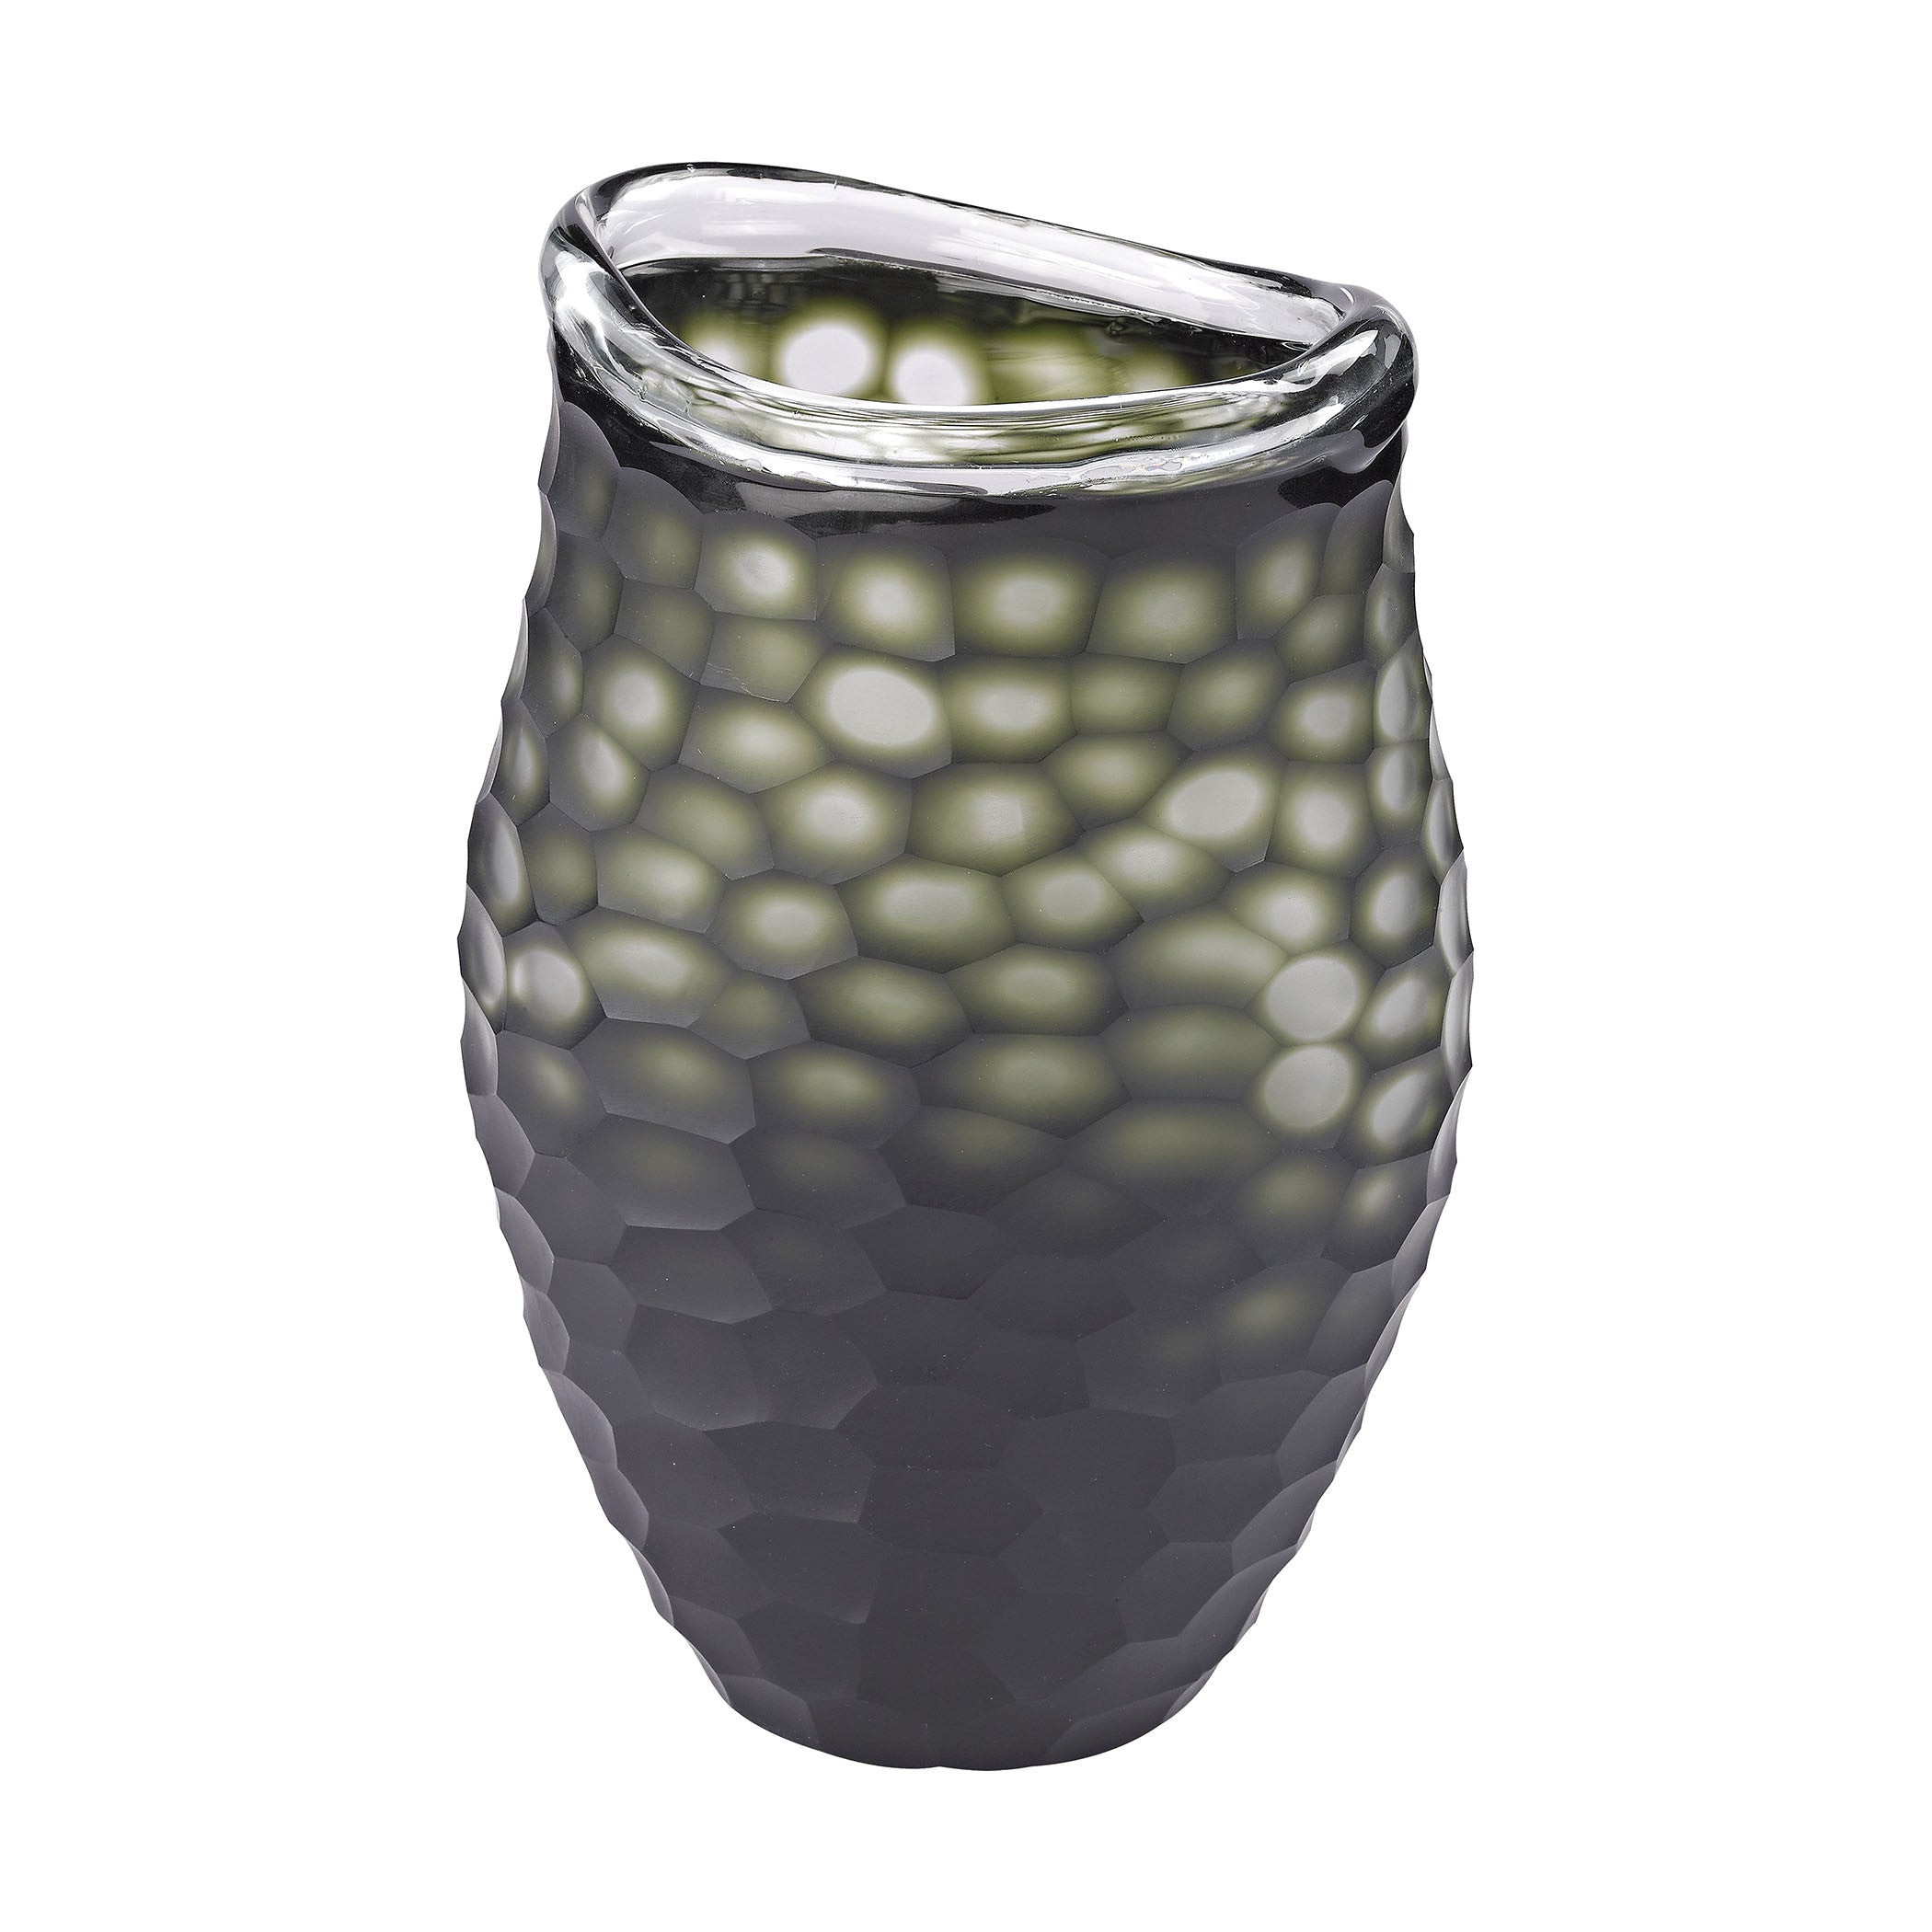 Guildmaster Gui-4154-041 Gogli Collection Green,black Finish Vase/urn